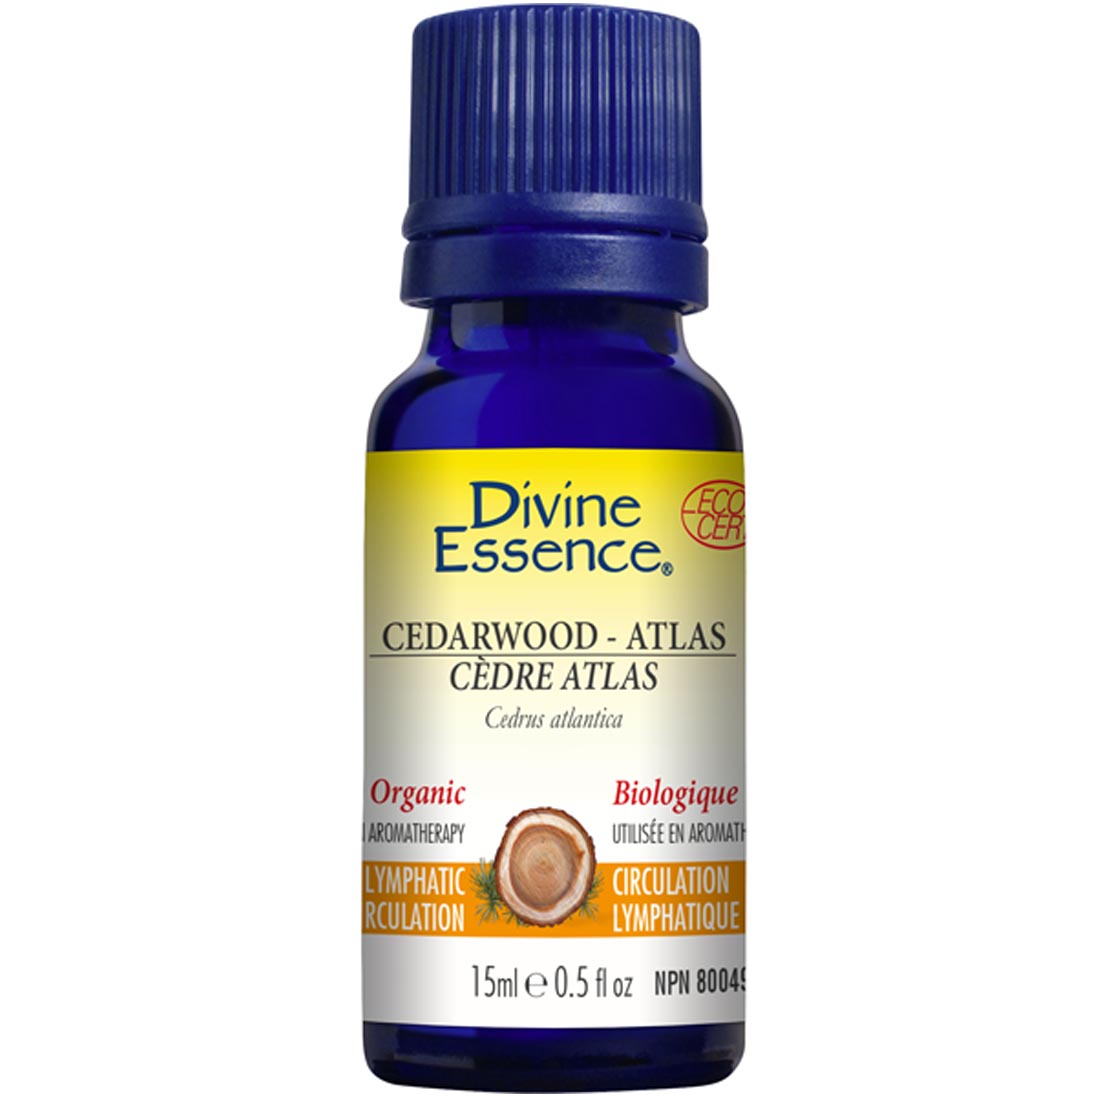 Divine Essence Cedarwood - Atlas Essential Oil (Organic), 15ml